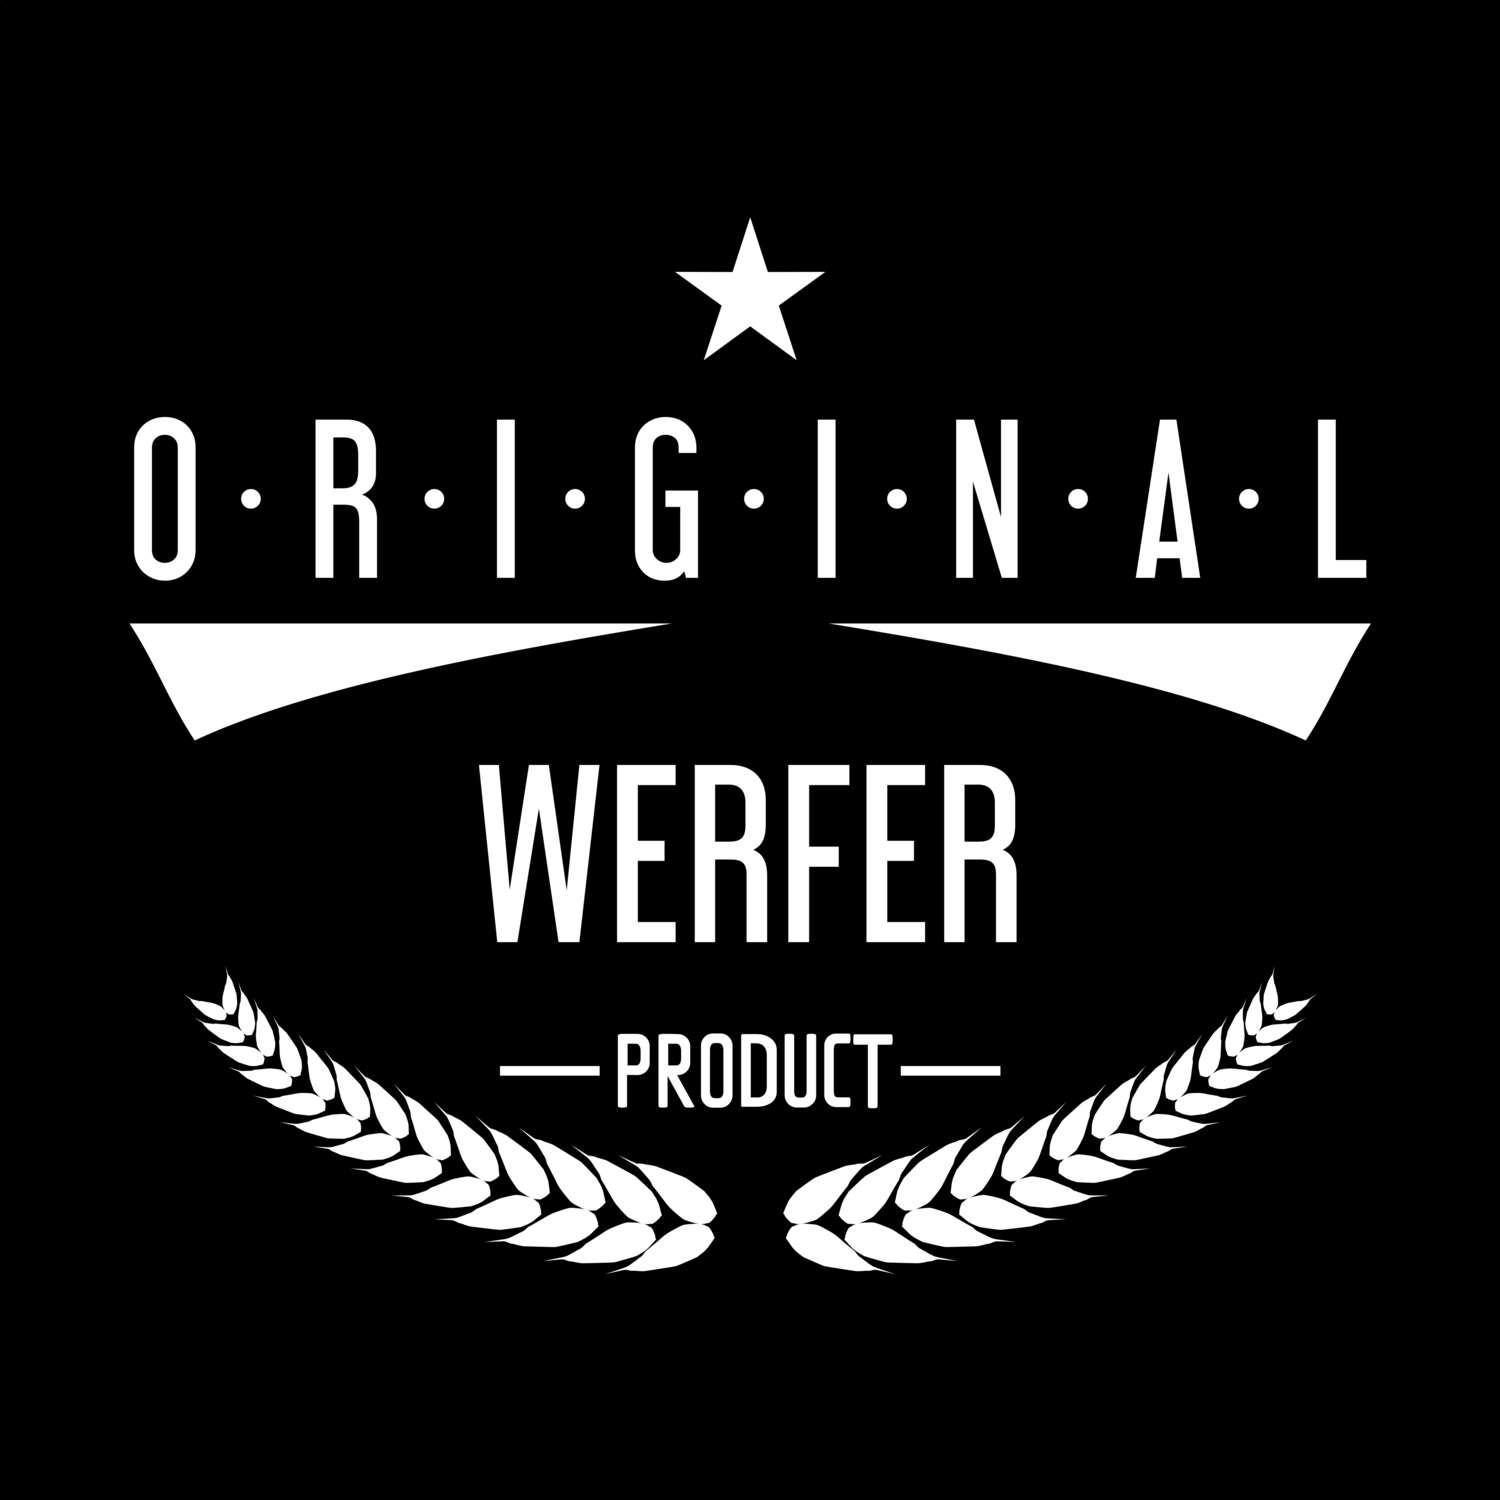 Werfer T-Shirt »Original Product«